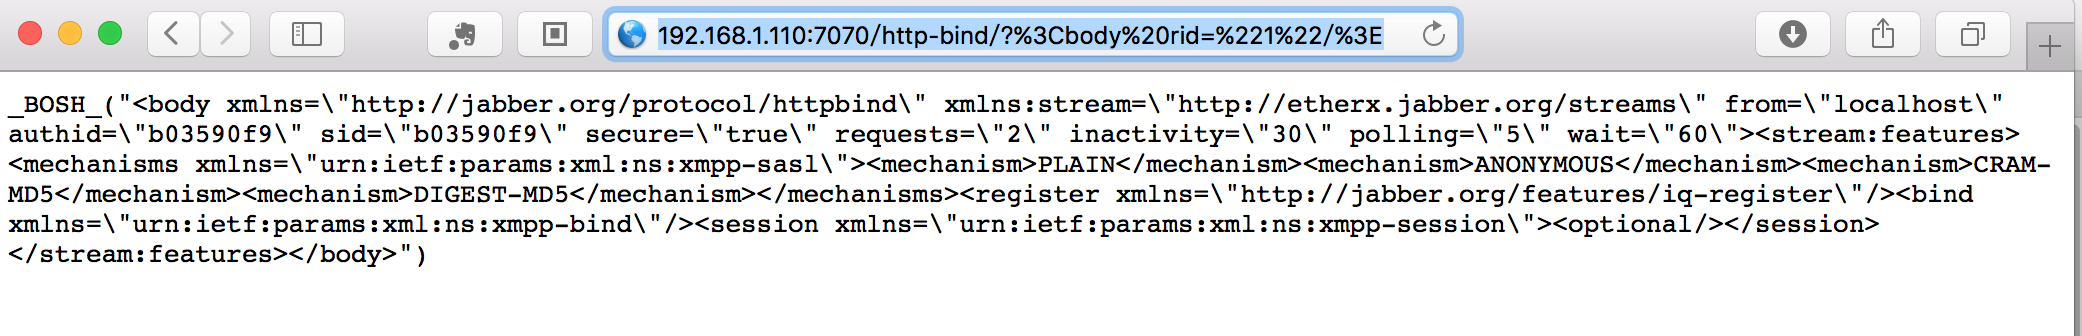 ［已解决］XMPP访问7070/http-bind/出错：HTTP ERROR 400 Problem accessing /http-bind/ Reason: Bad Request Powered by Jetty://